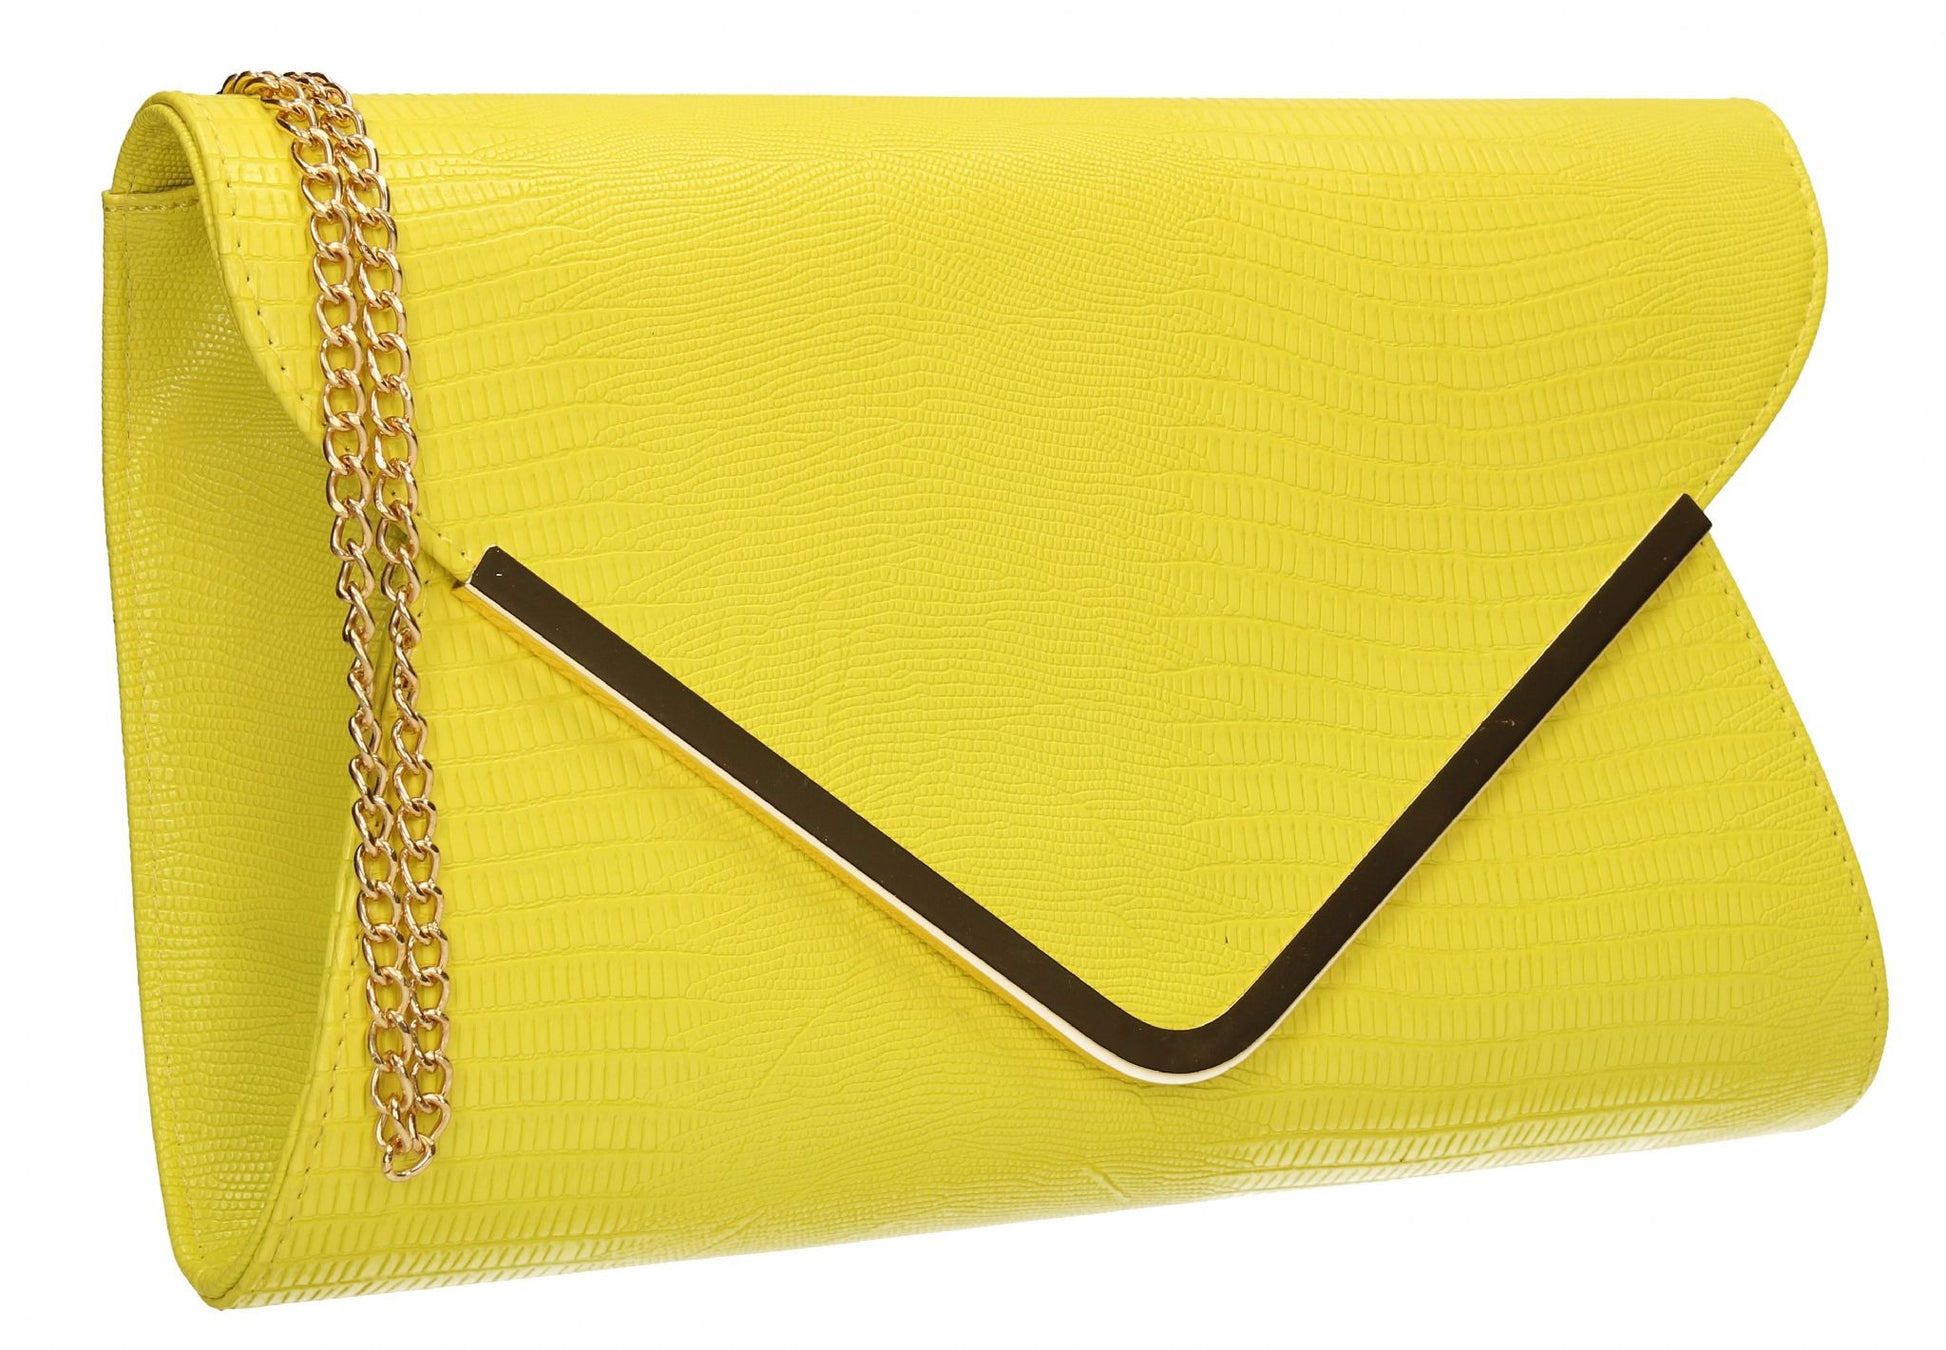 SWANKYSWANS Lauren Clutch Bag Yellow Cute Cheap Clutch Bag For Weddings School and Work